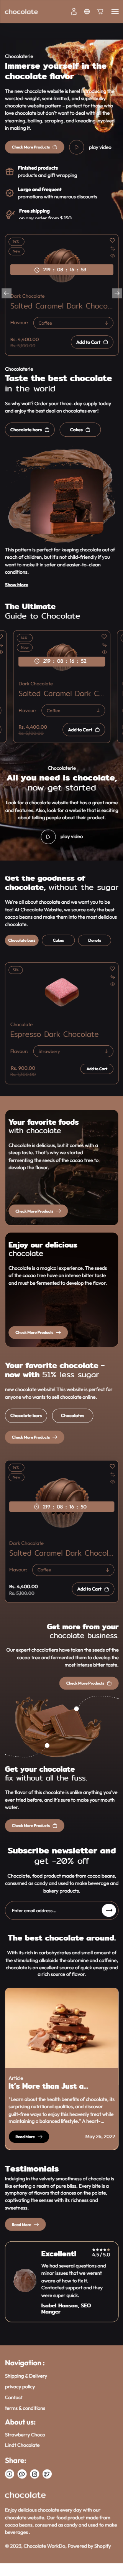 Chocolate WordPress Theme - WorkDo